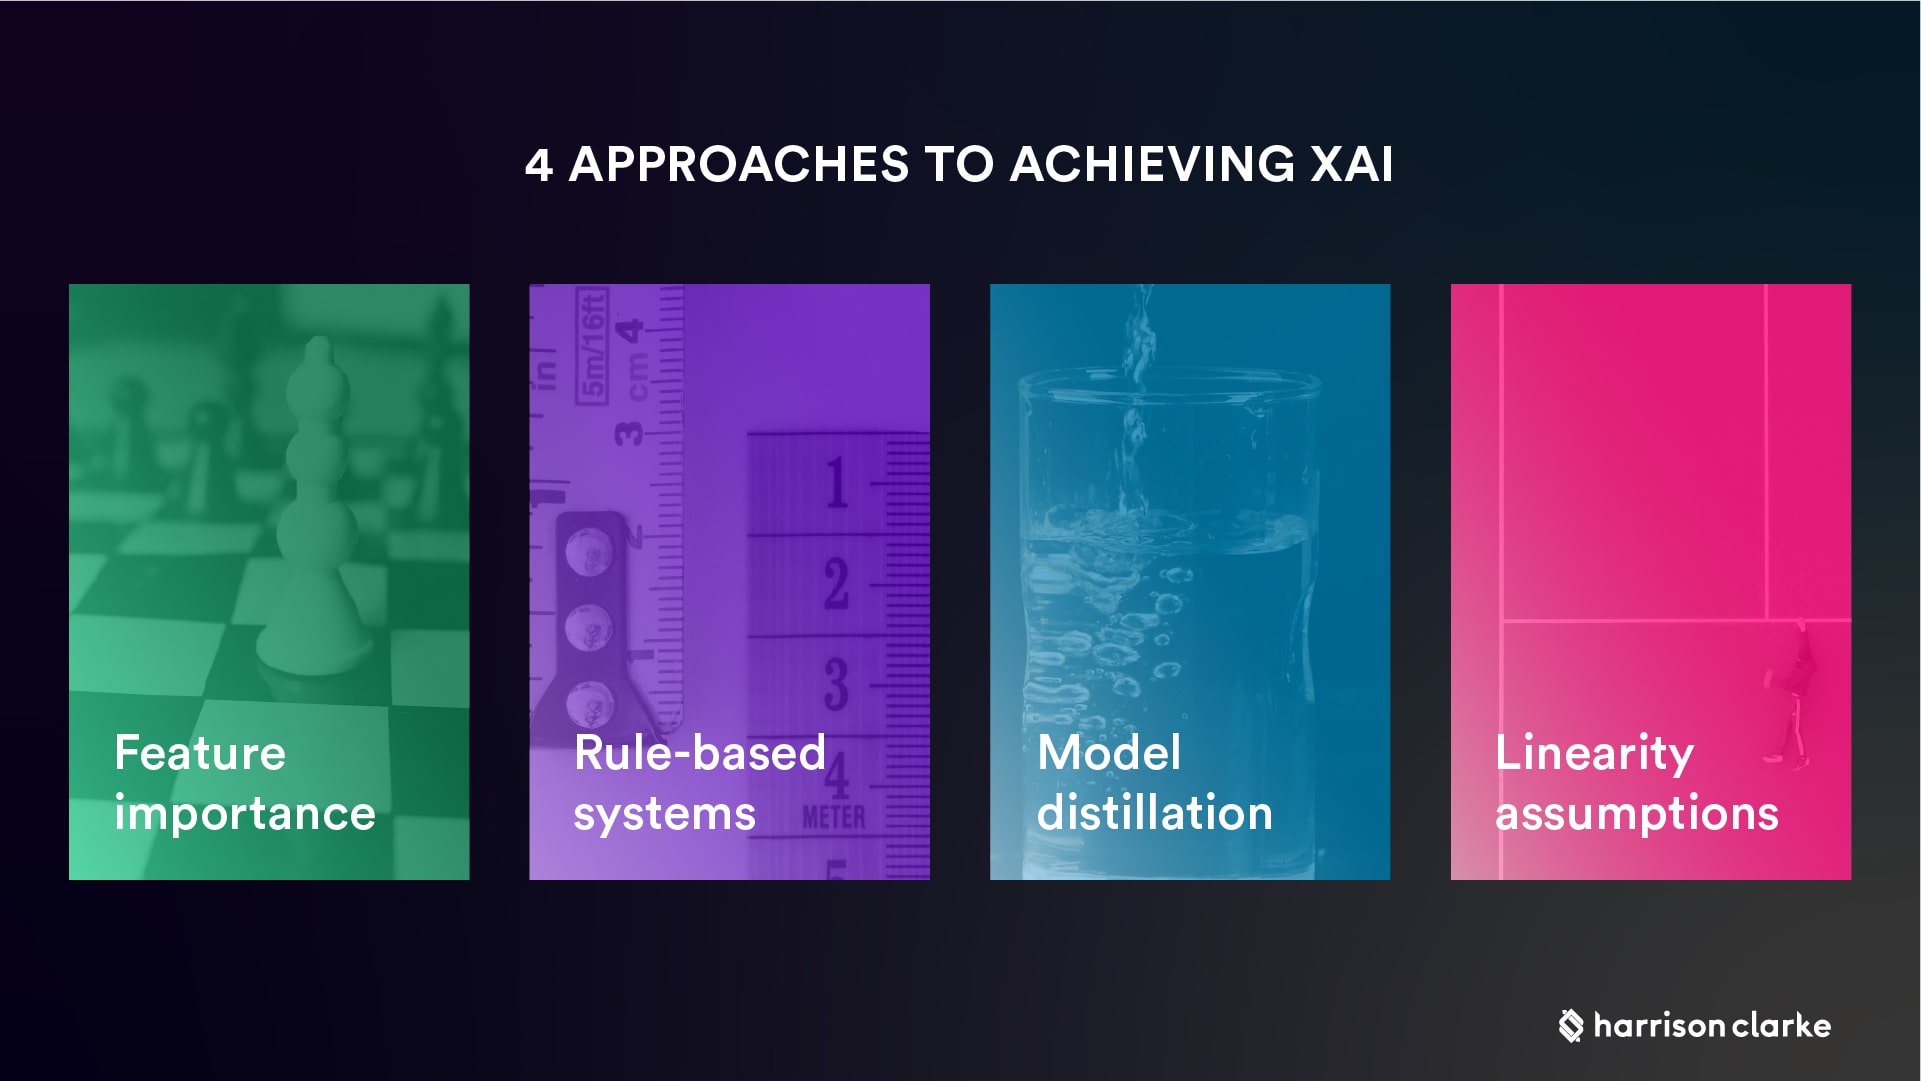 Approaches to achieving XAI